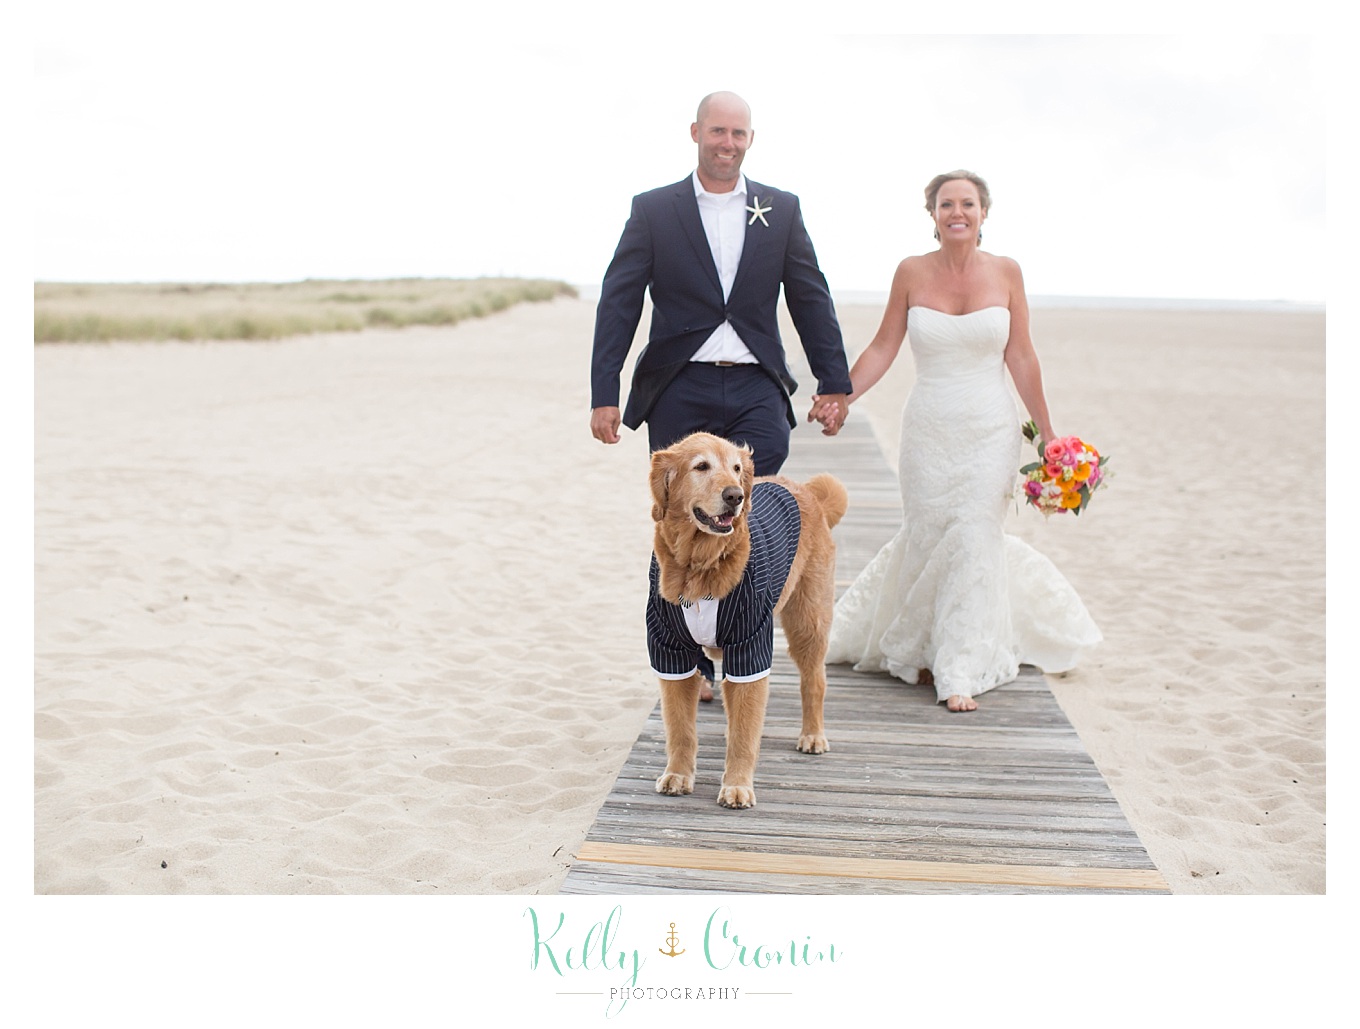 A dog leads a couple | Kelly Cronin Photography | Cape Cod Wedding Photographer